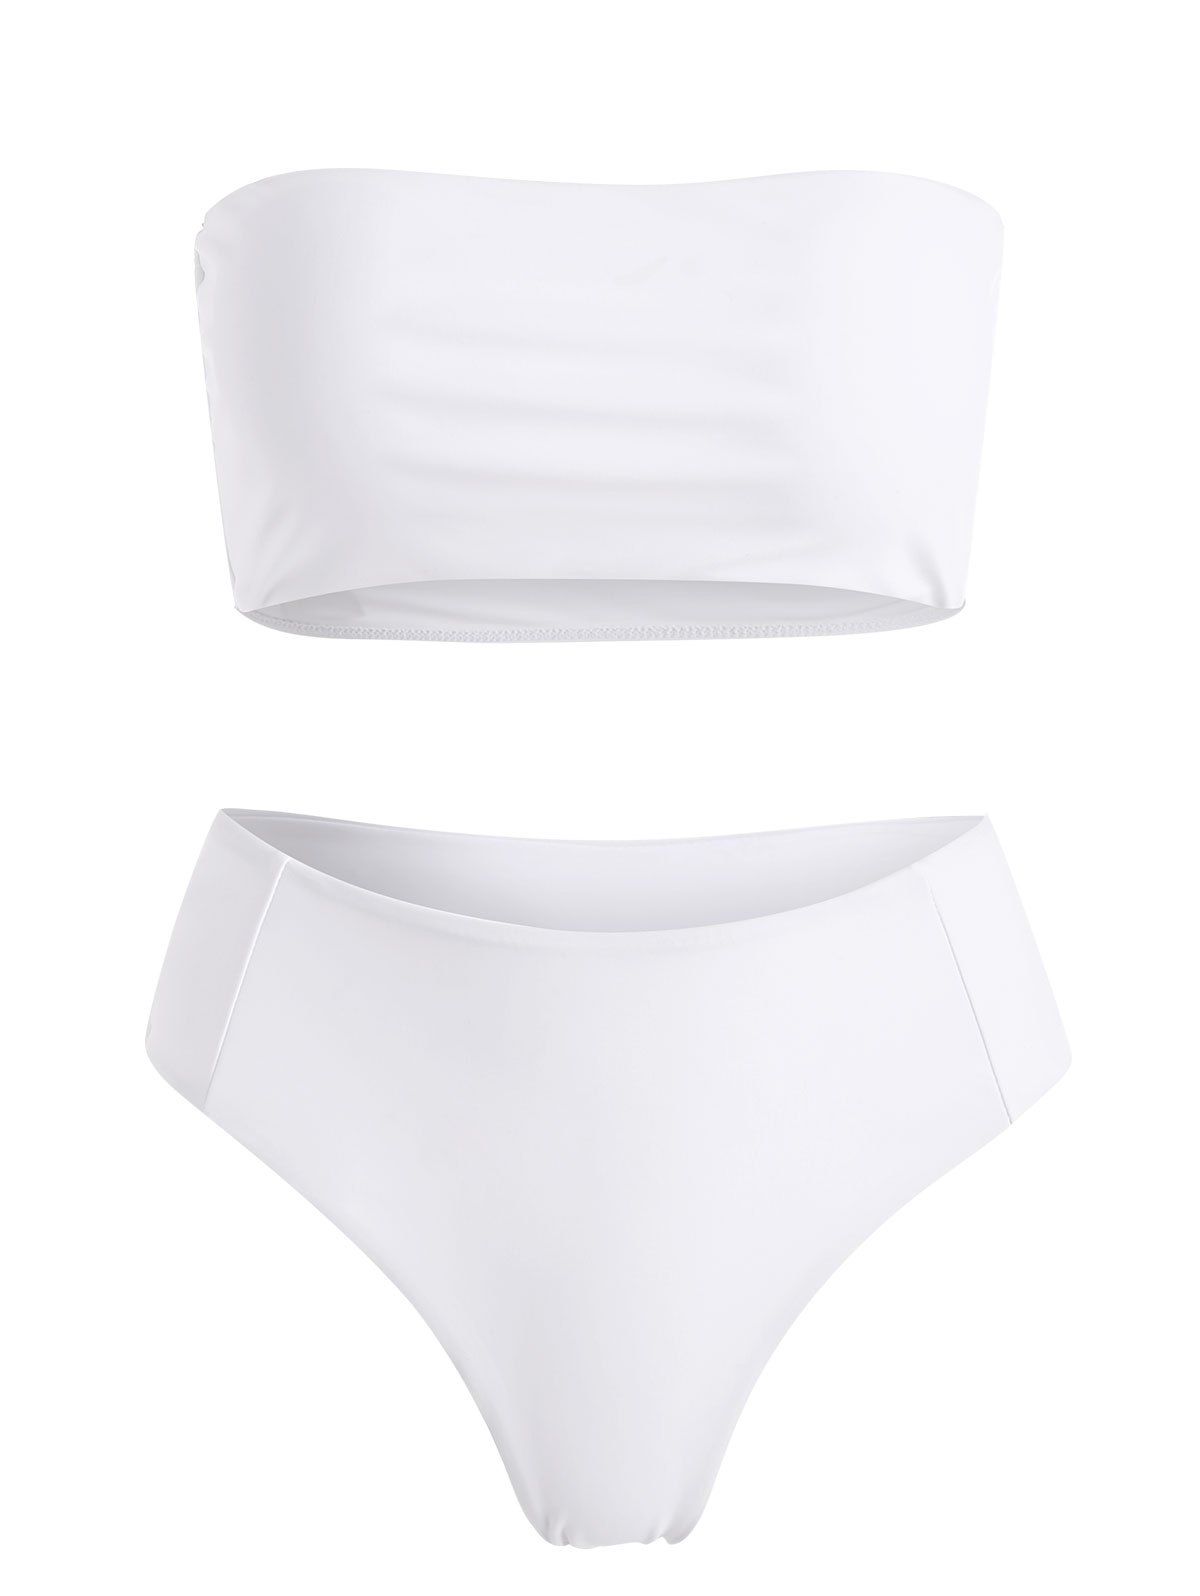 Bandeau Collar High Cut Bikini Set - WHITE L